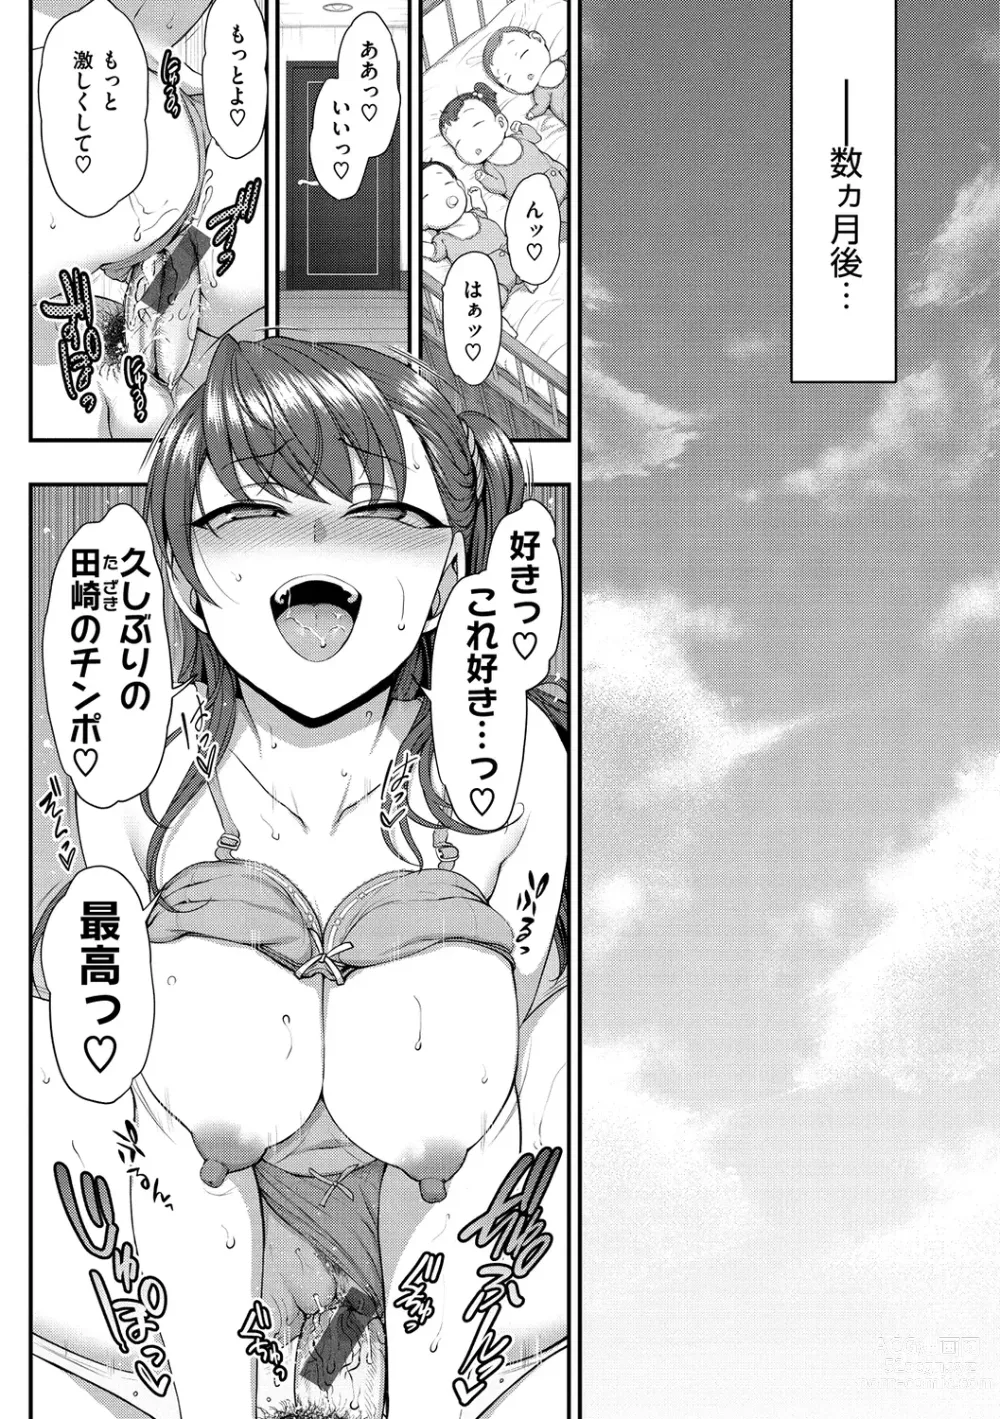 Page 241 of manga Ijirare